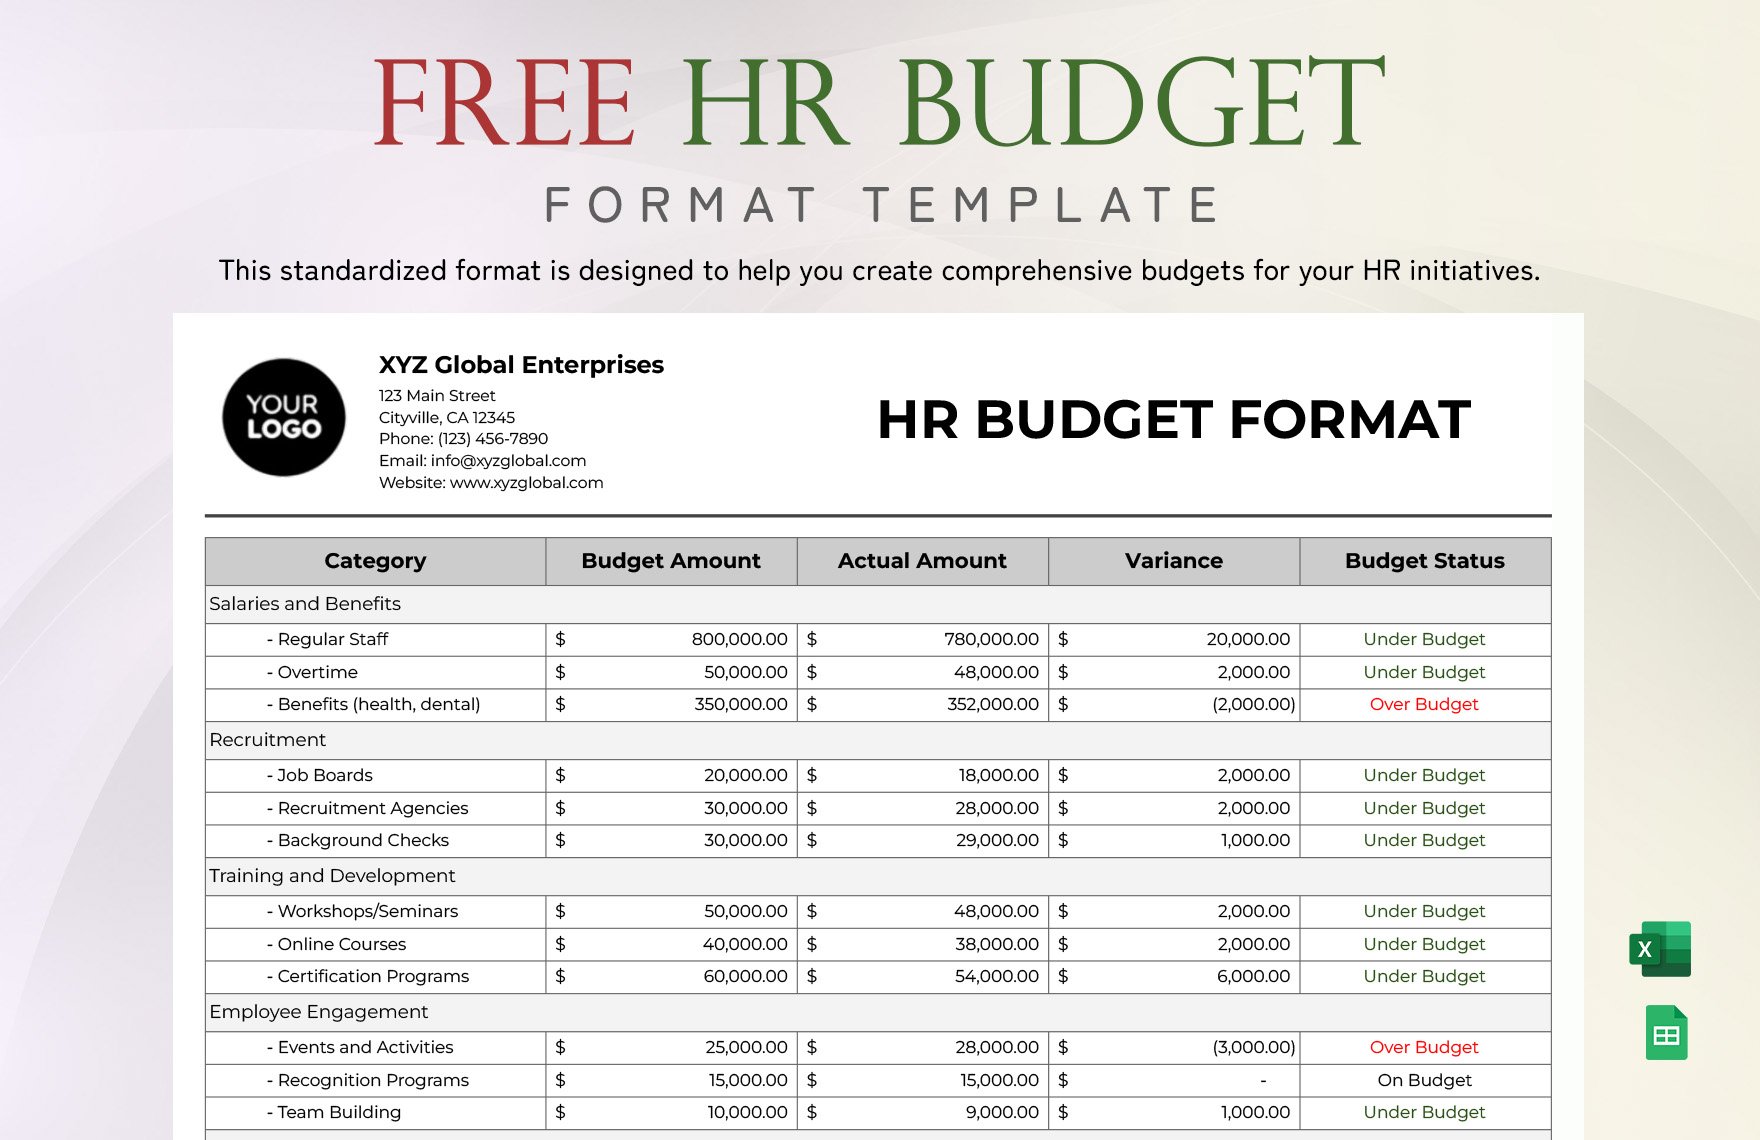 HR Budget Format Template